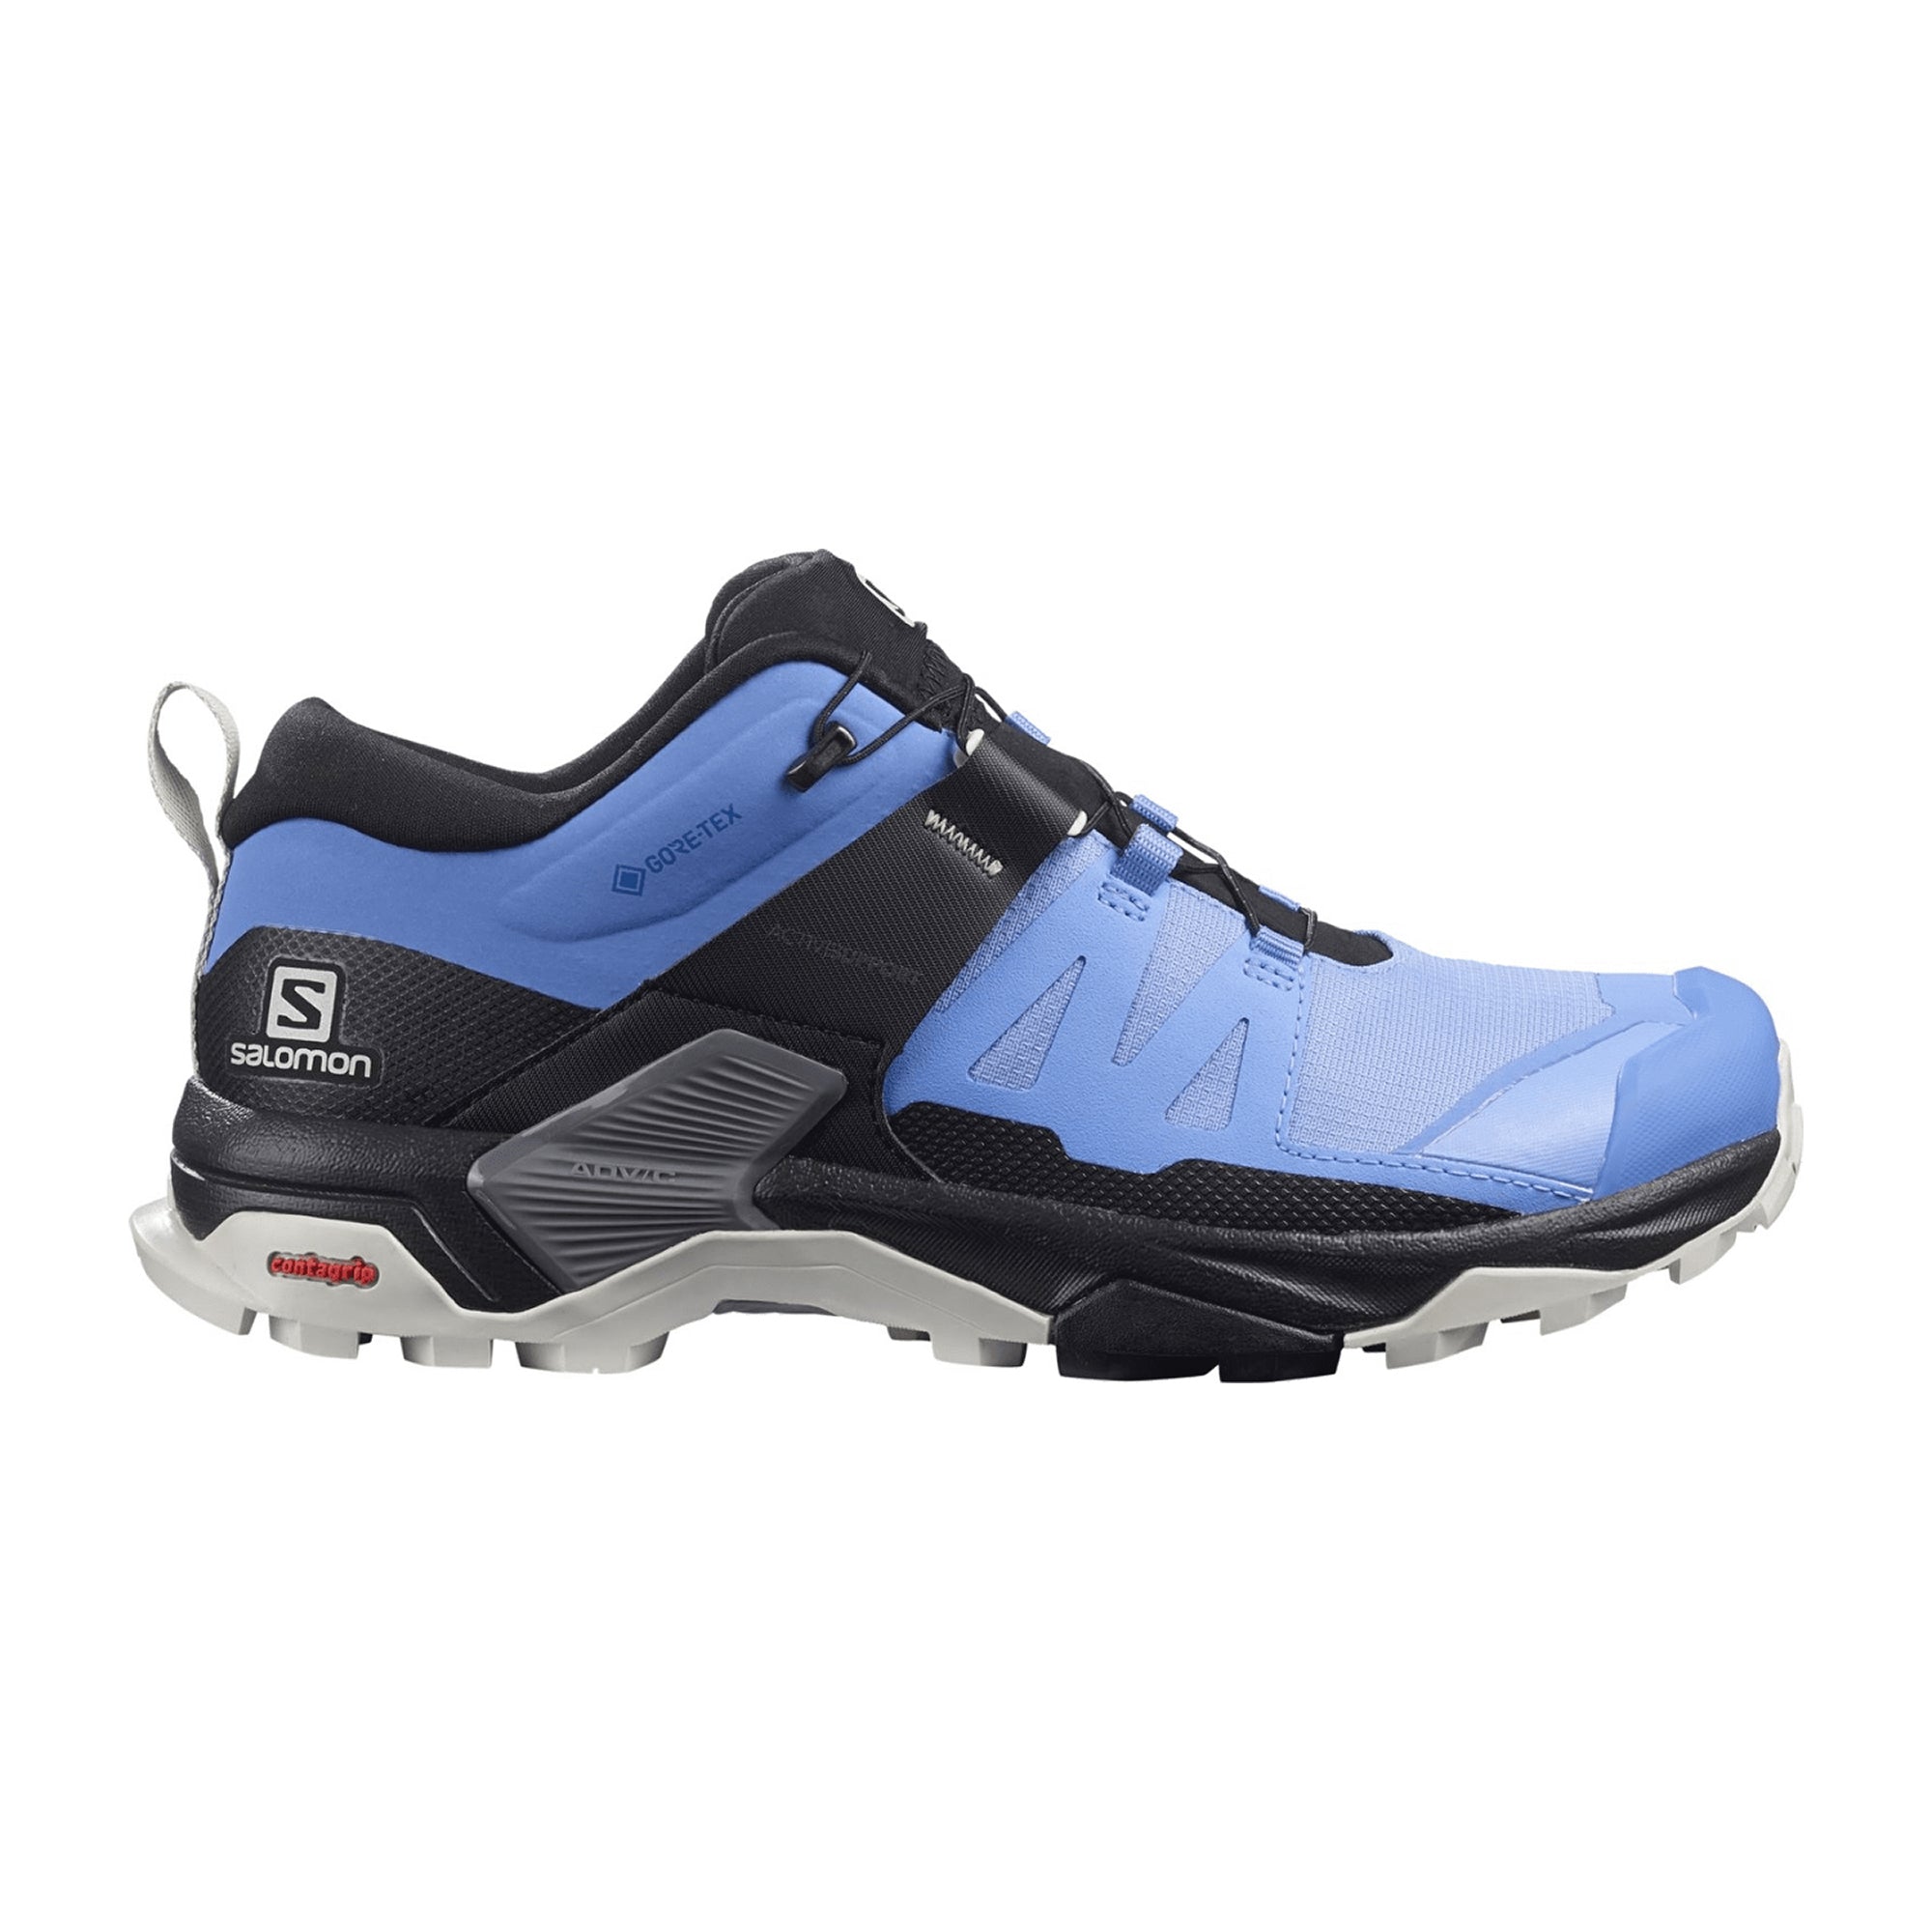 Salomon shoes X ULTRA 4 GTX W Marina/Black for women, blue